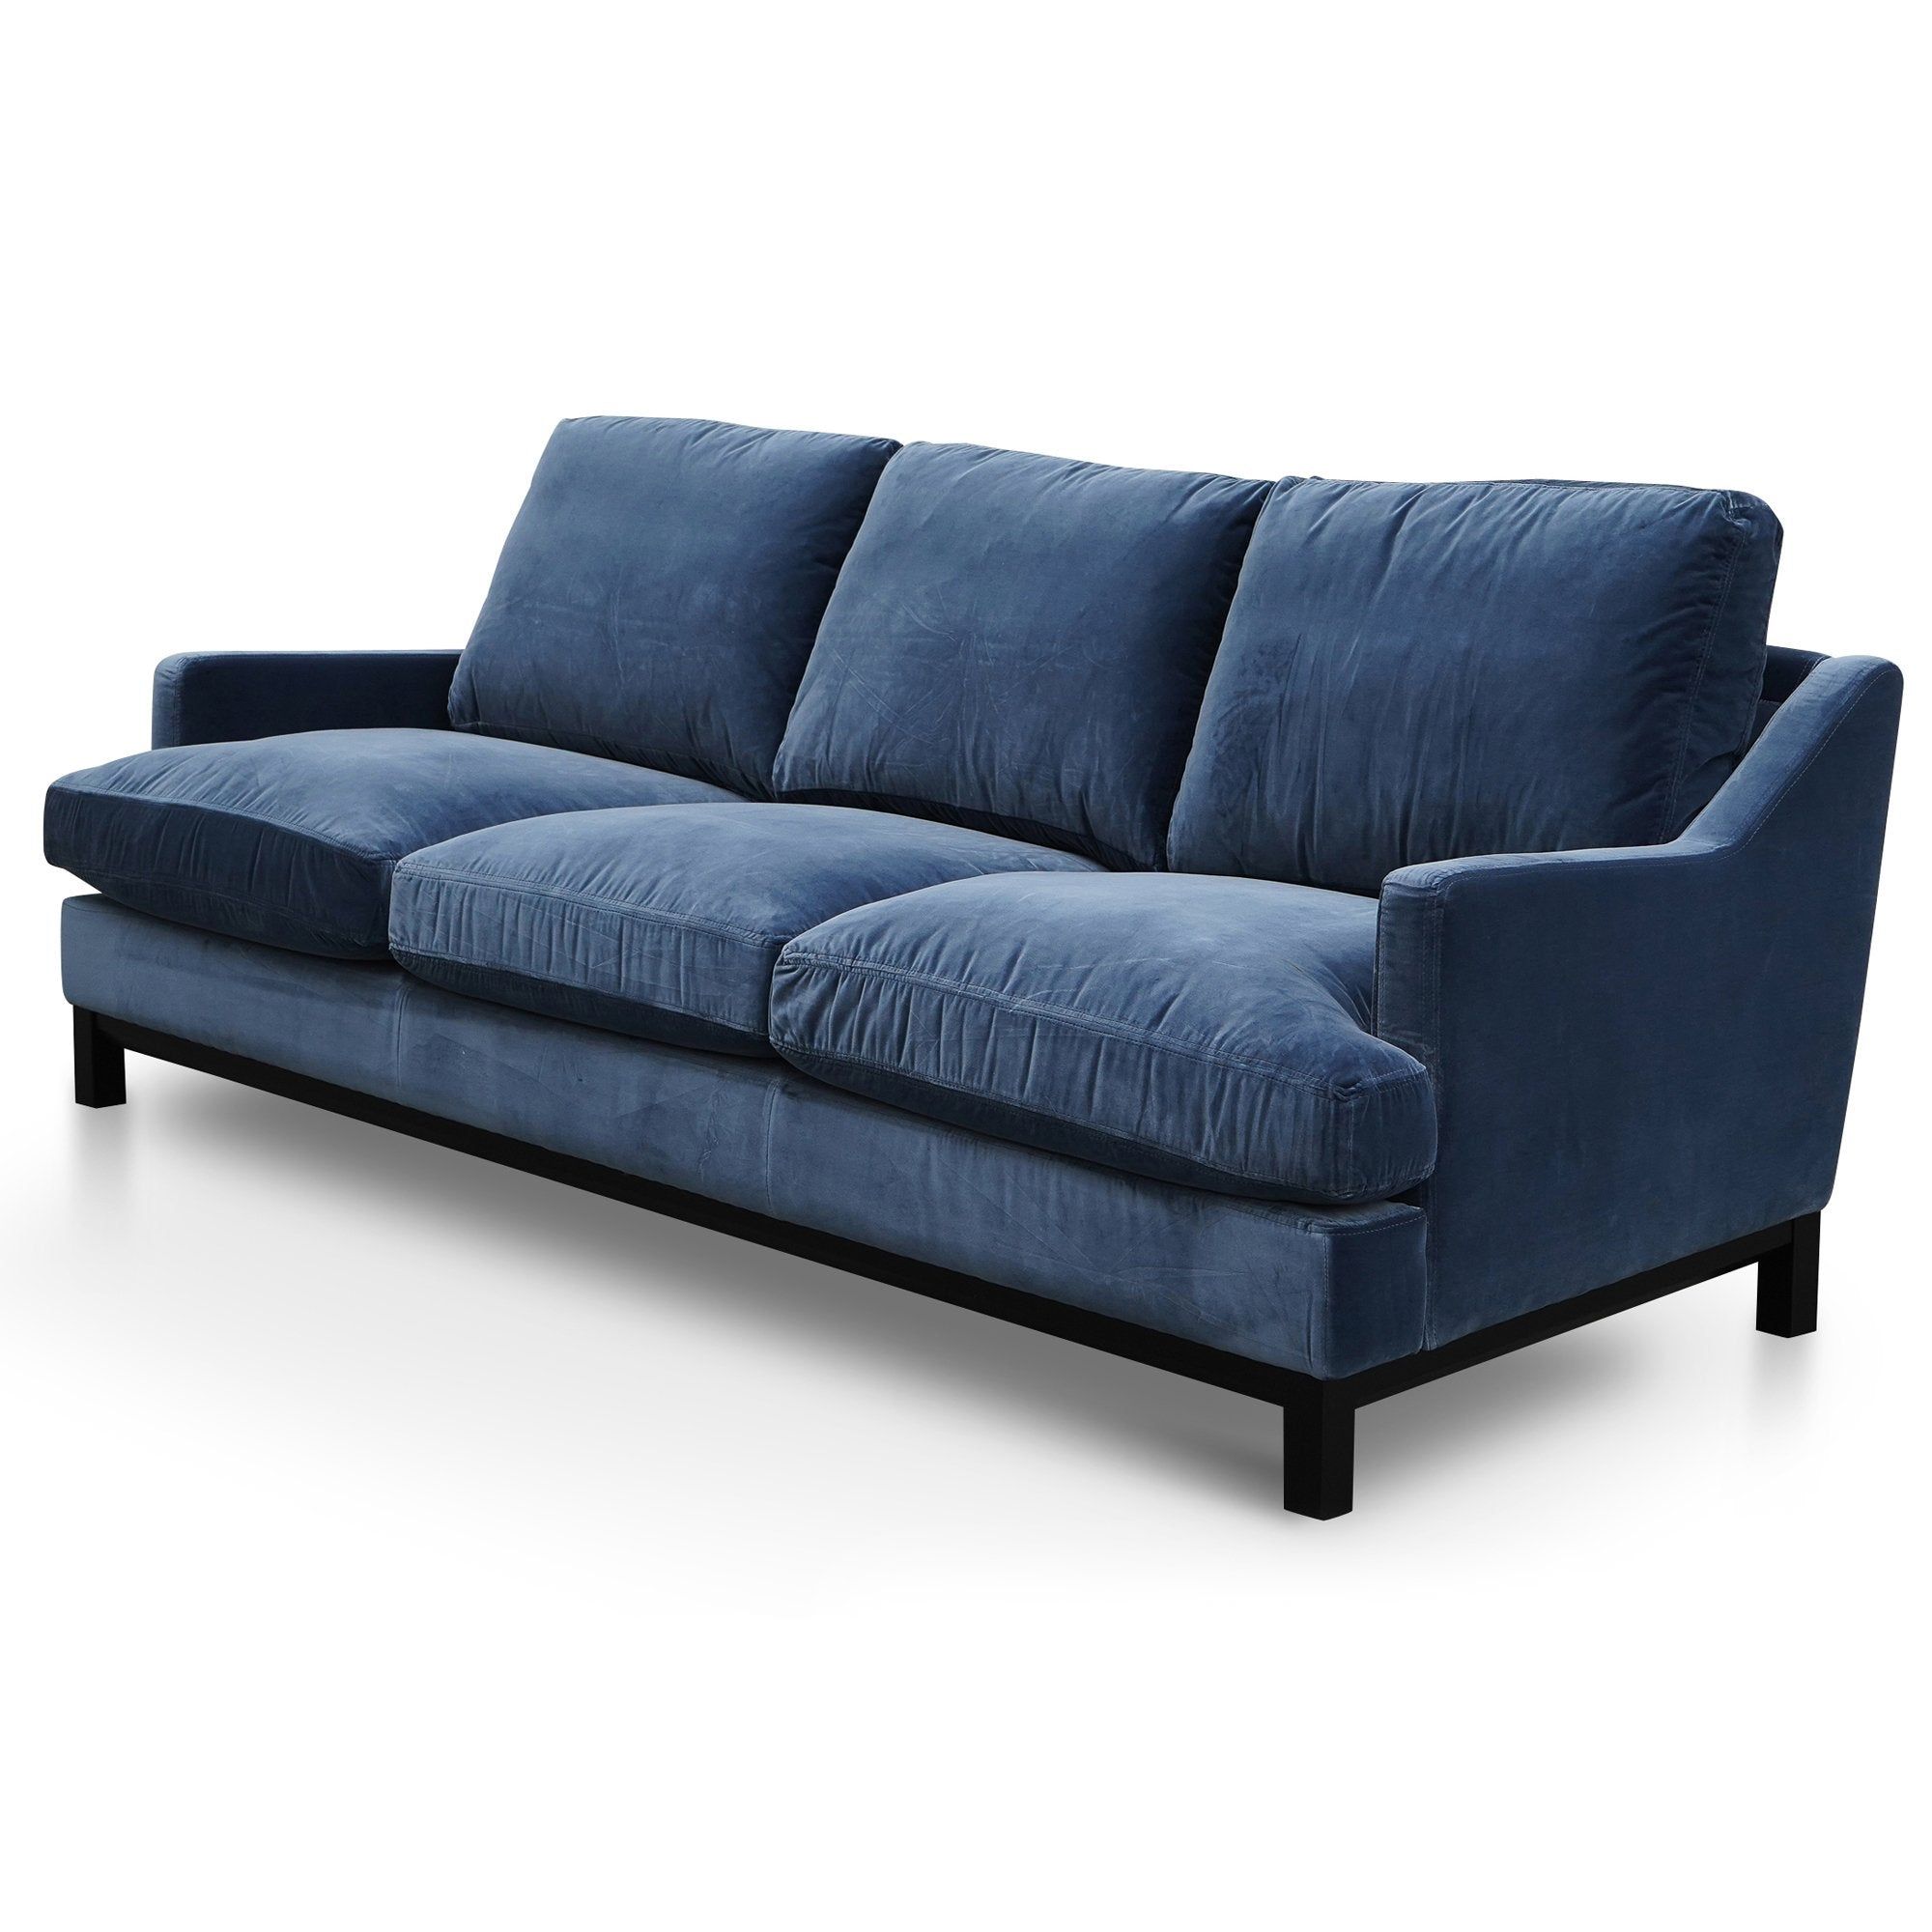 Hensley 3 Seater Fabric Sofa – Midnight Navy Velvet | Interior Secrets Within Navy Linen Coil Sofas (Gallery 9 of 20)